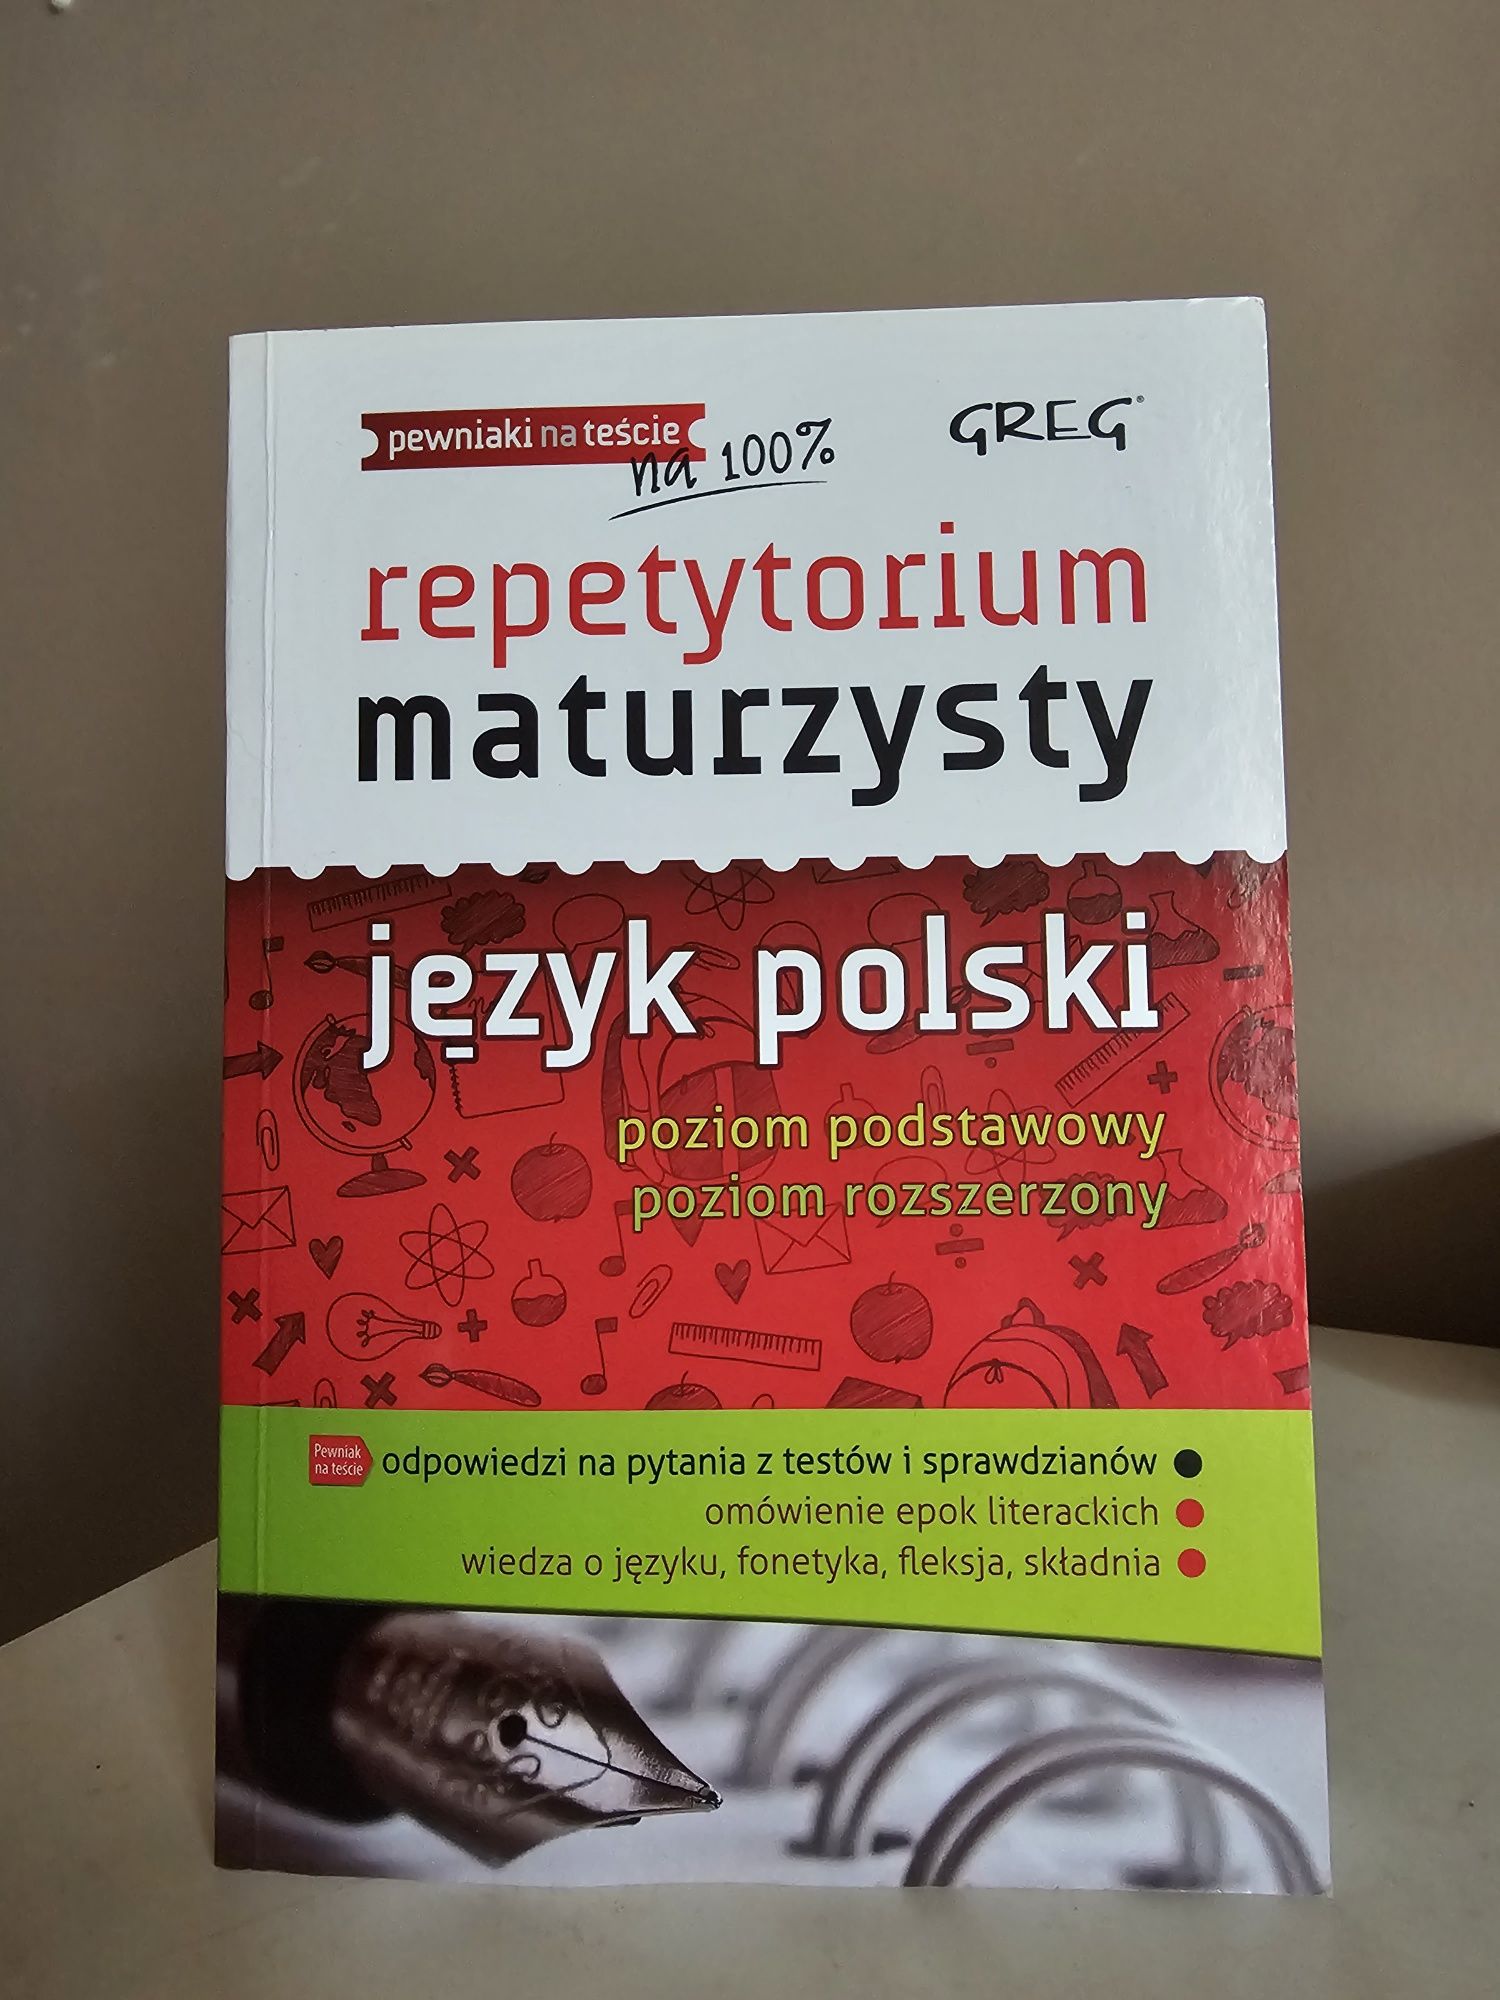 Repetytorium maturzysty polski